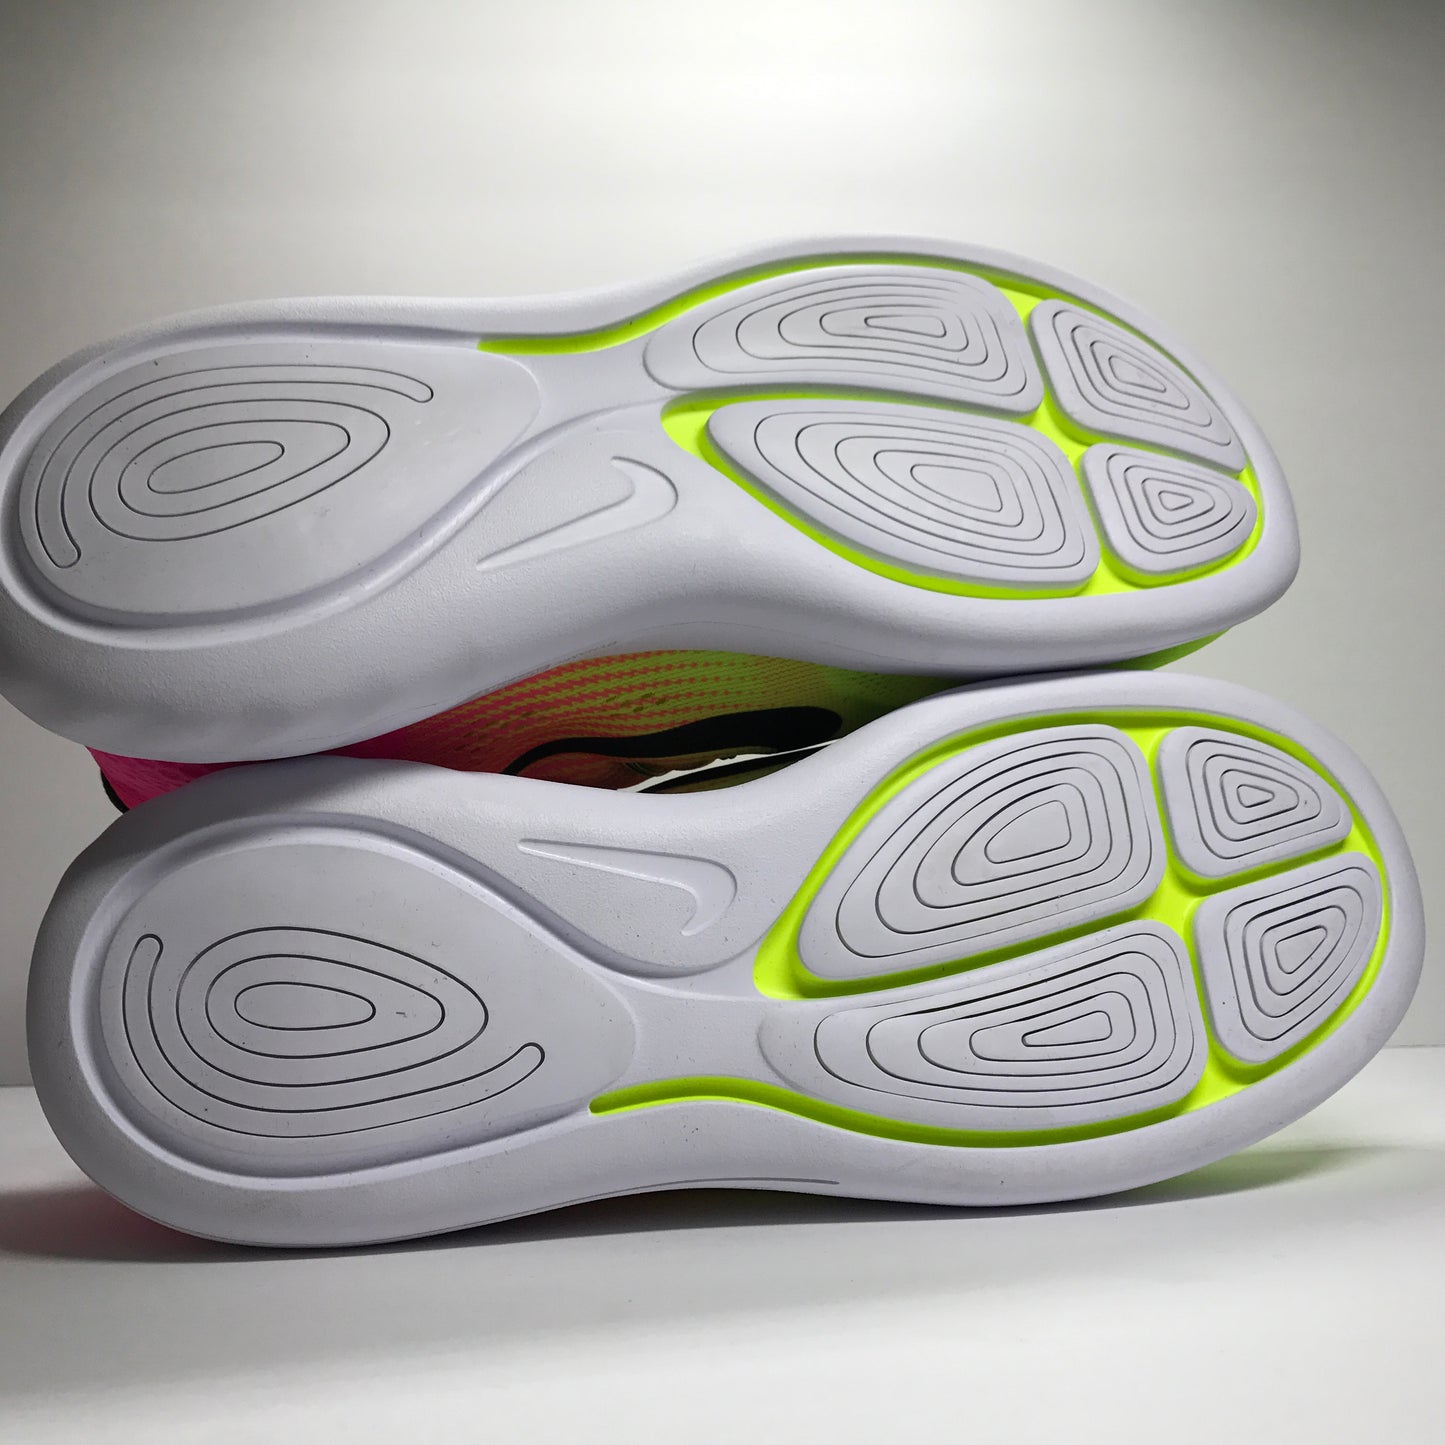 DS Nike Lunarglide 8 OC Size 10/Size 12